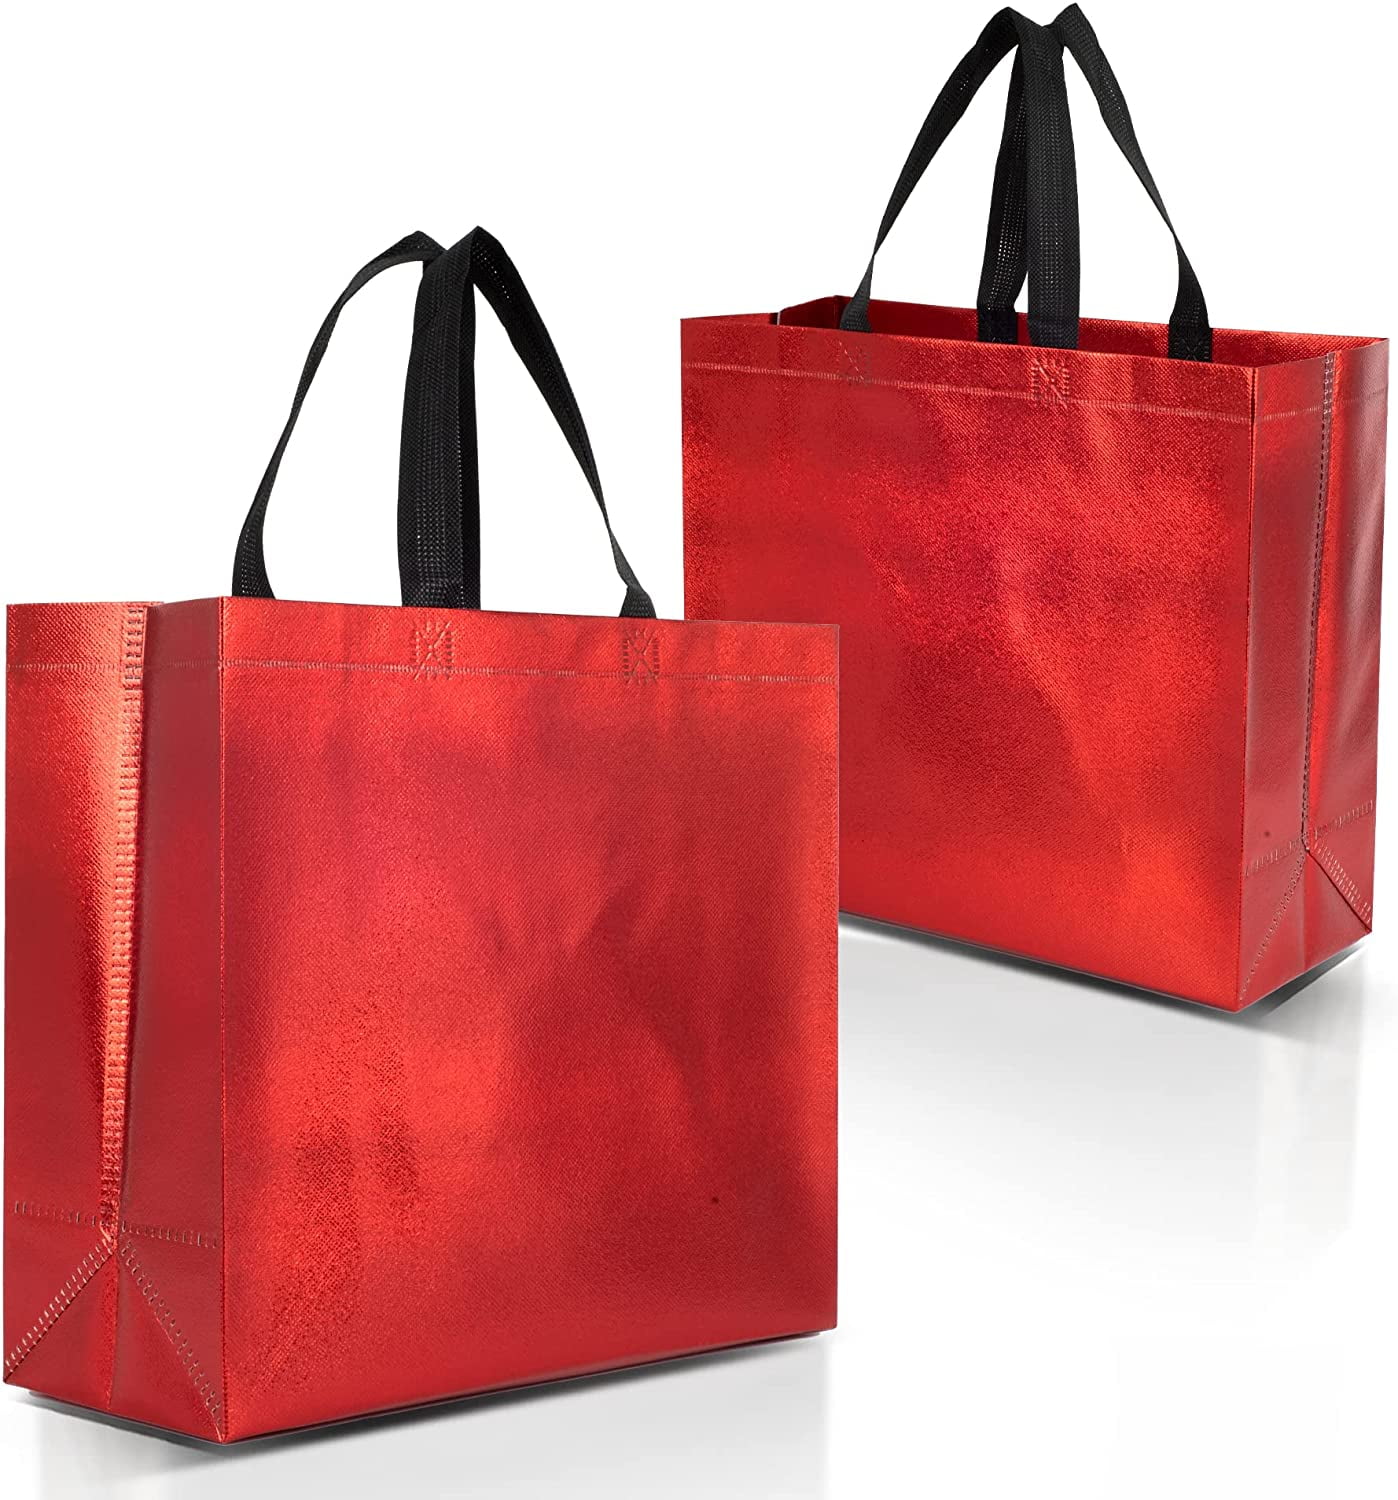 12 Red Metallic Paper Carrier/ Gift Bags 23cmx18x7cm 